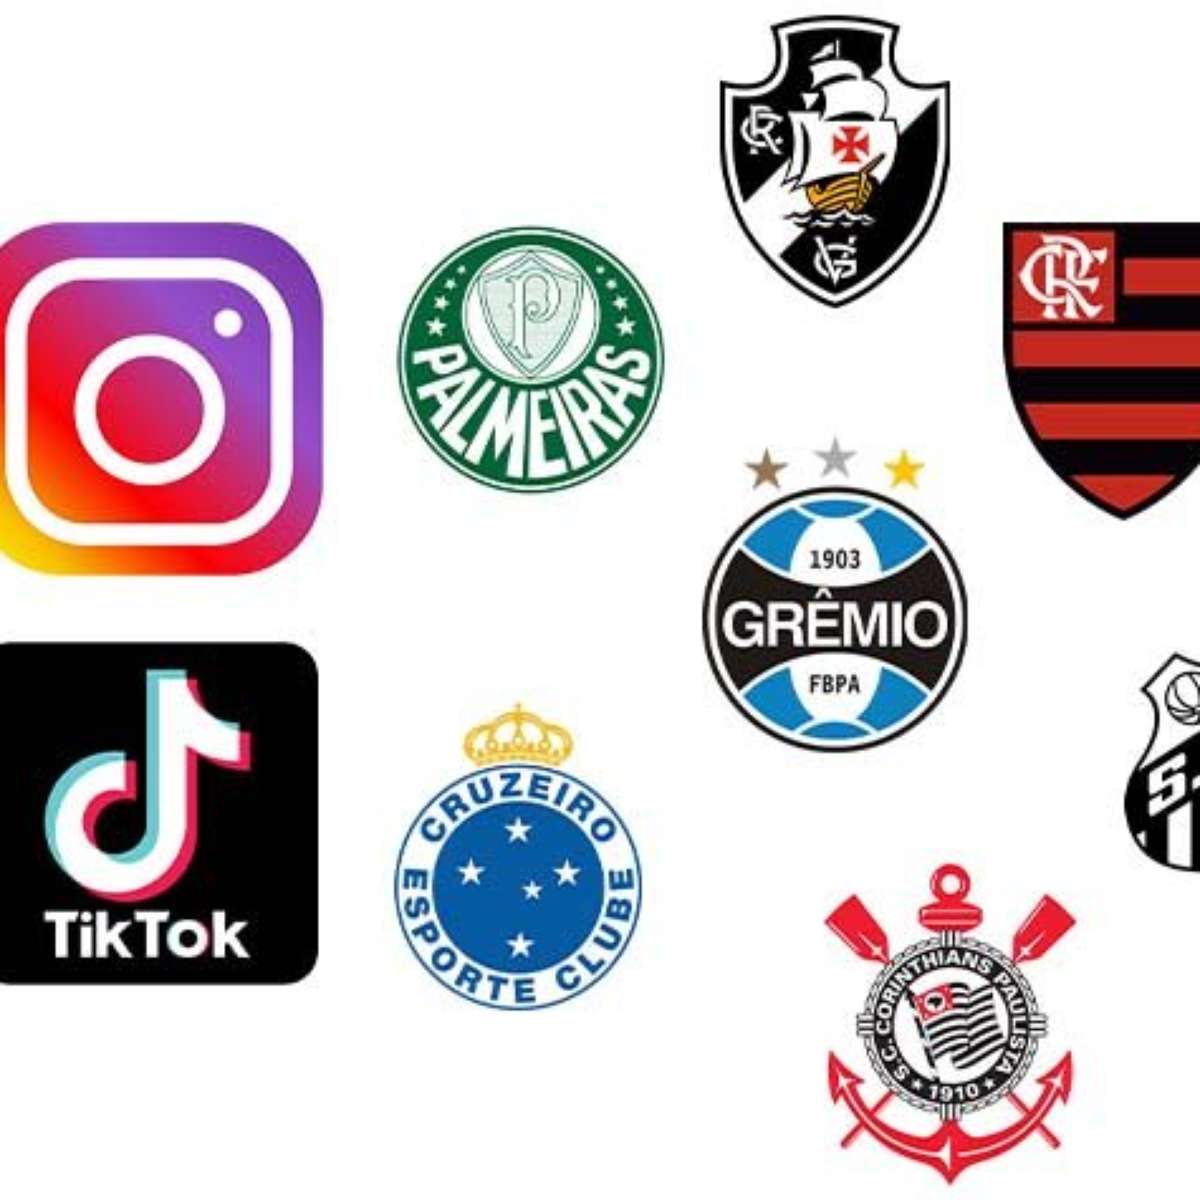 Ranking digital dos clubes brasileiros – Fev/2022 – IBOPE Repucom